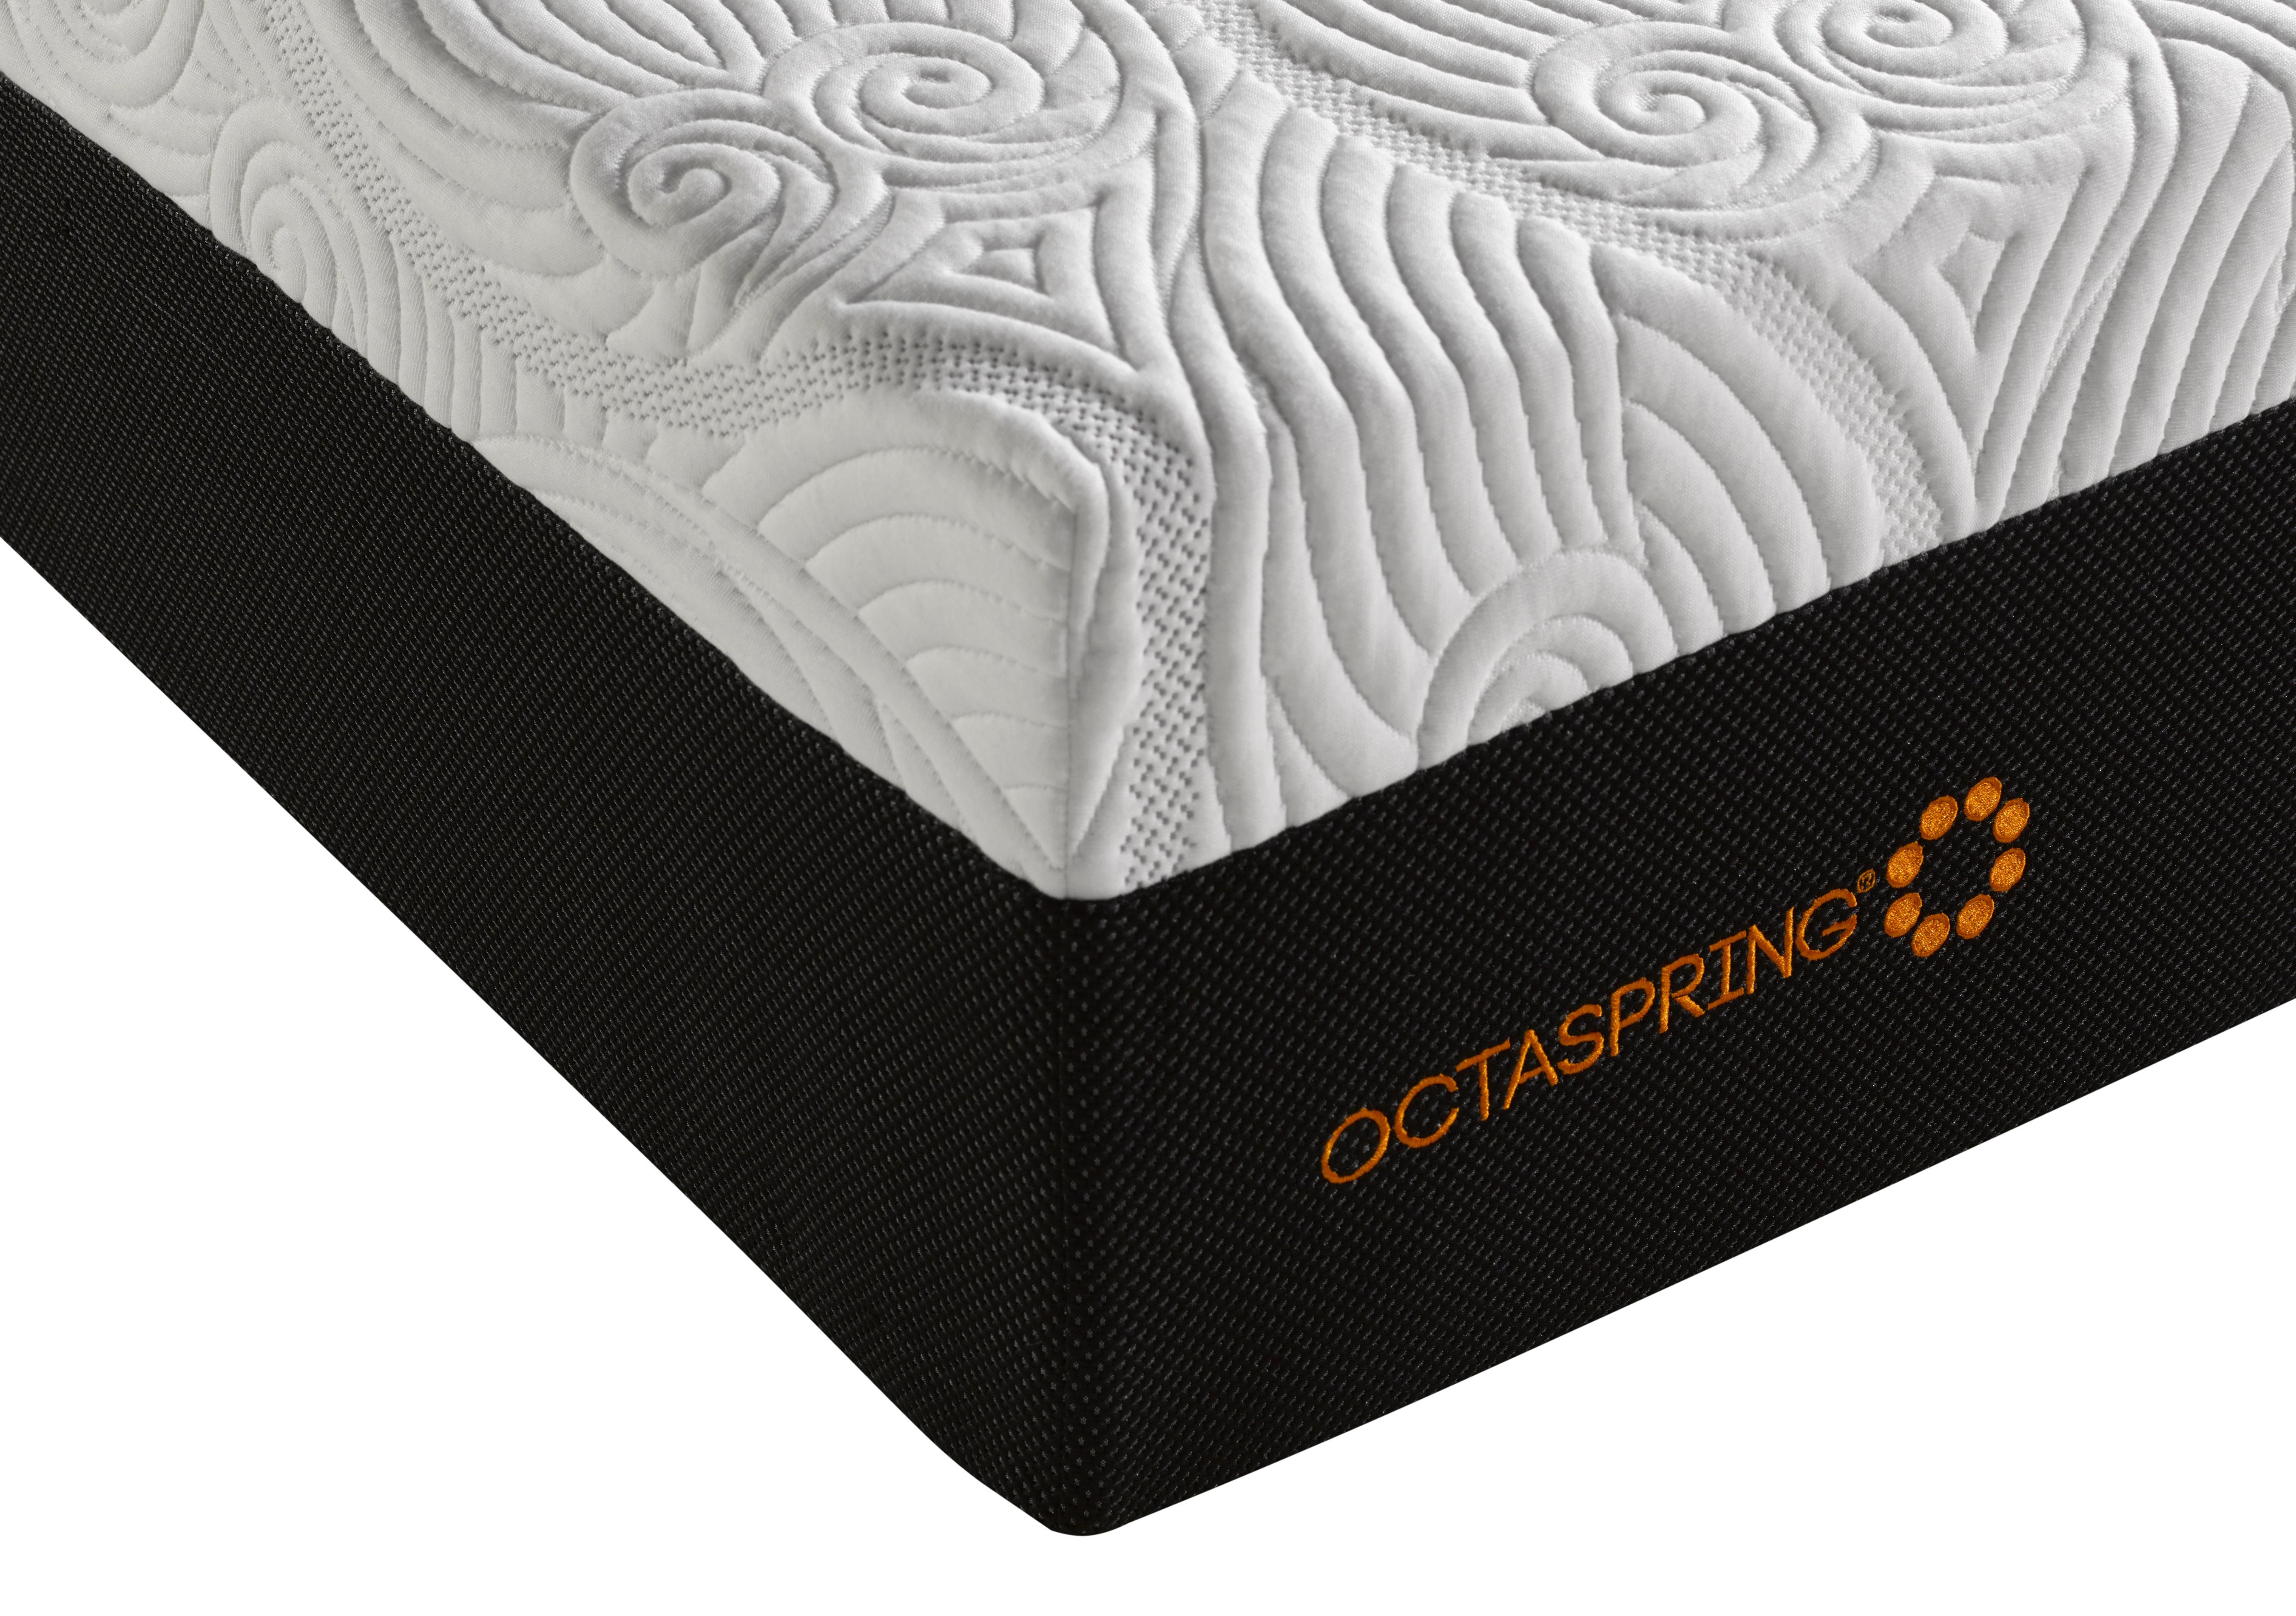 dormeo octaspring 9500 mattress reviews